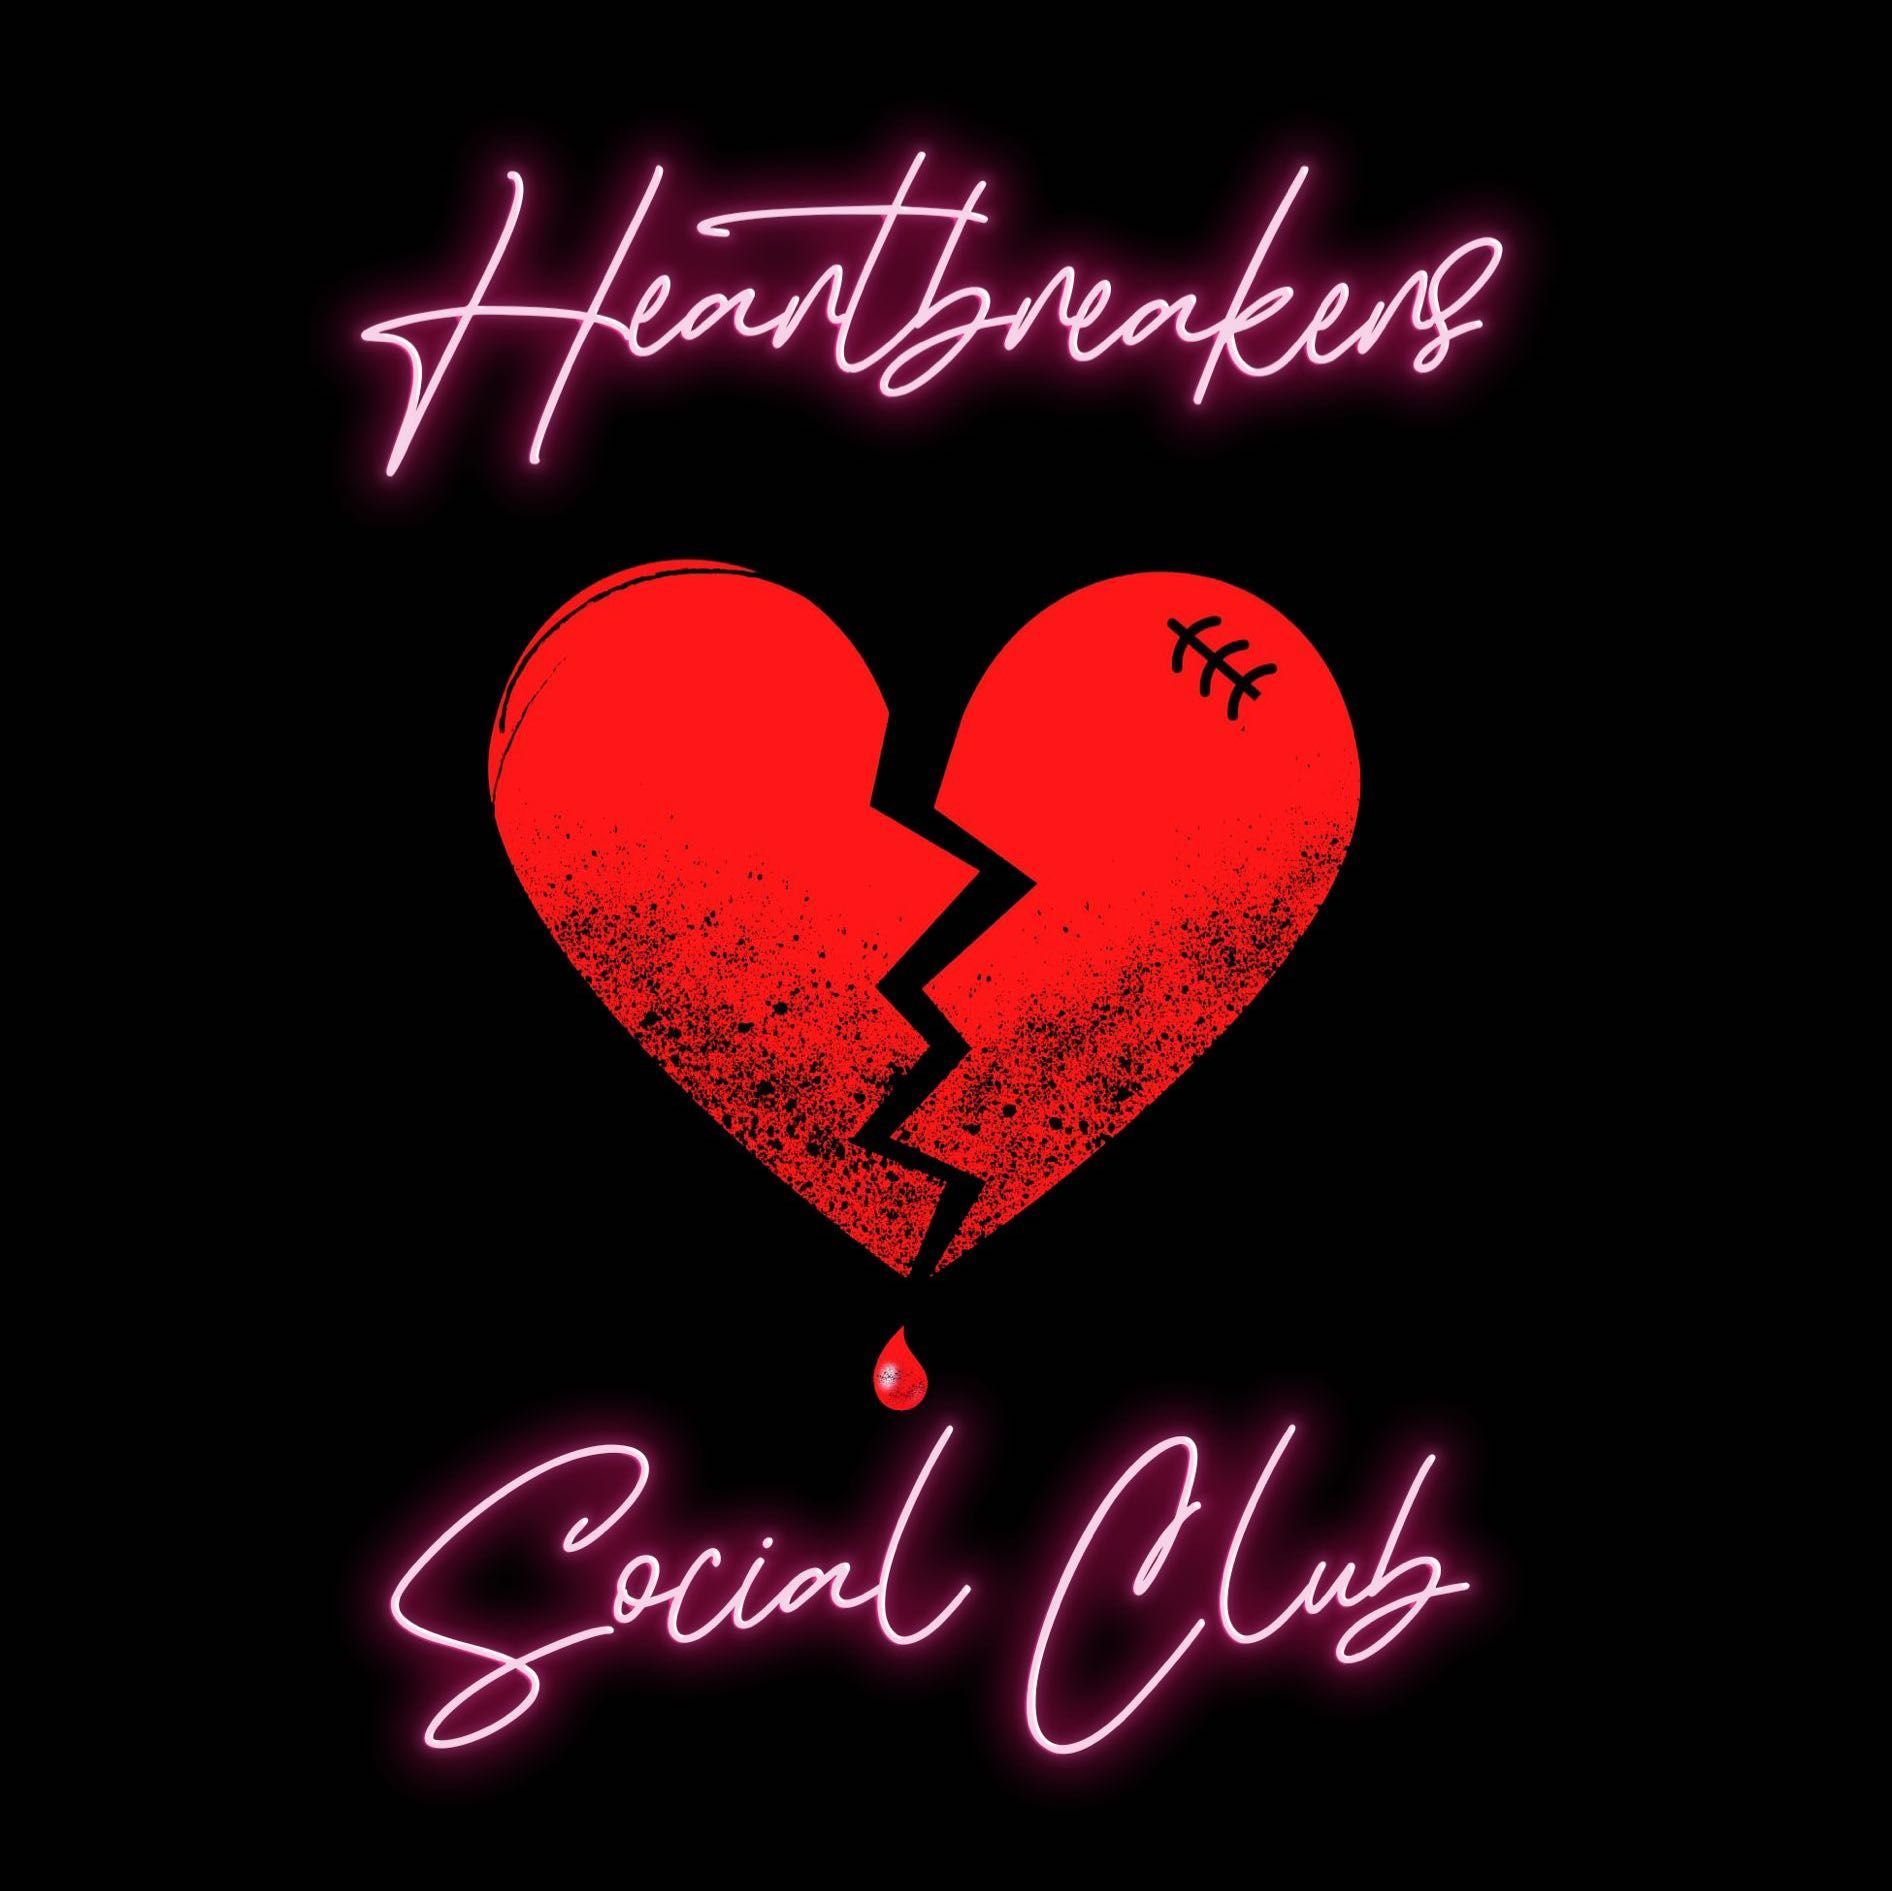 Heartbreakers Social Club, Carrer de la industria 65, 08025, Barcelona